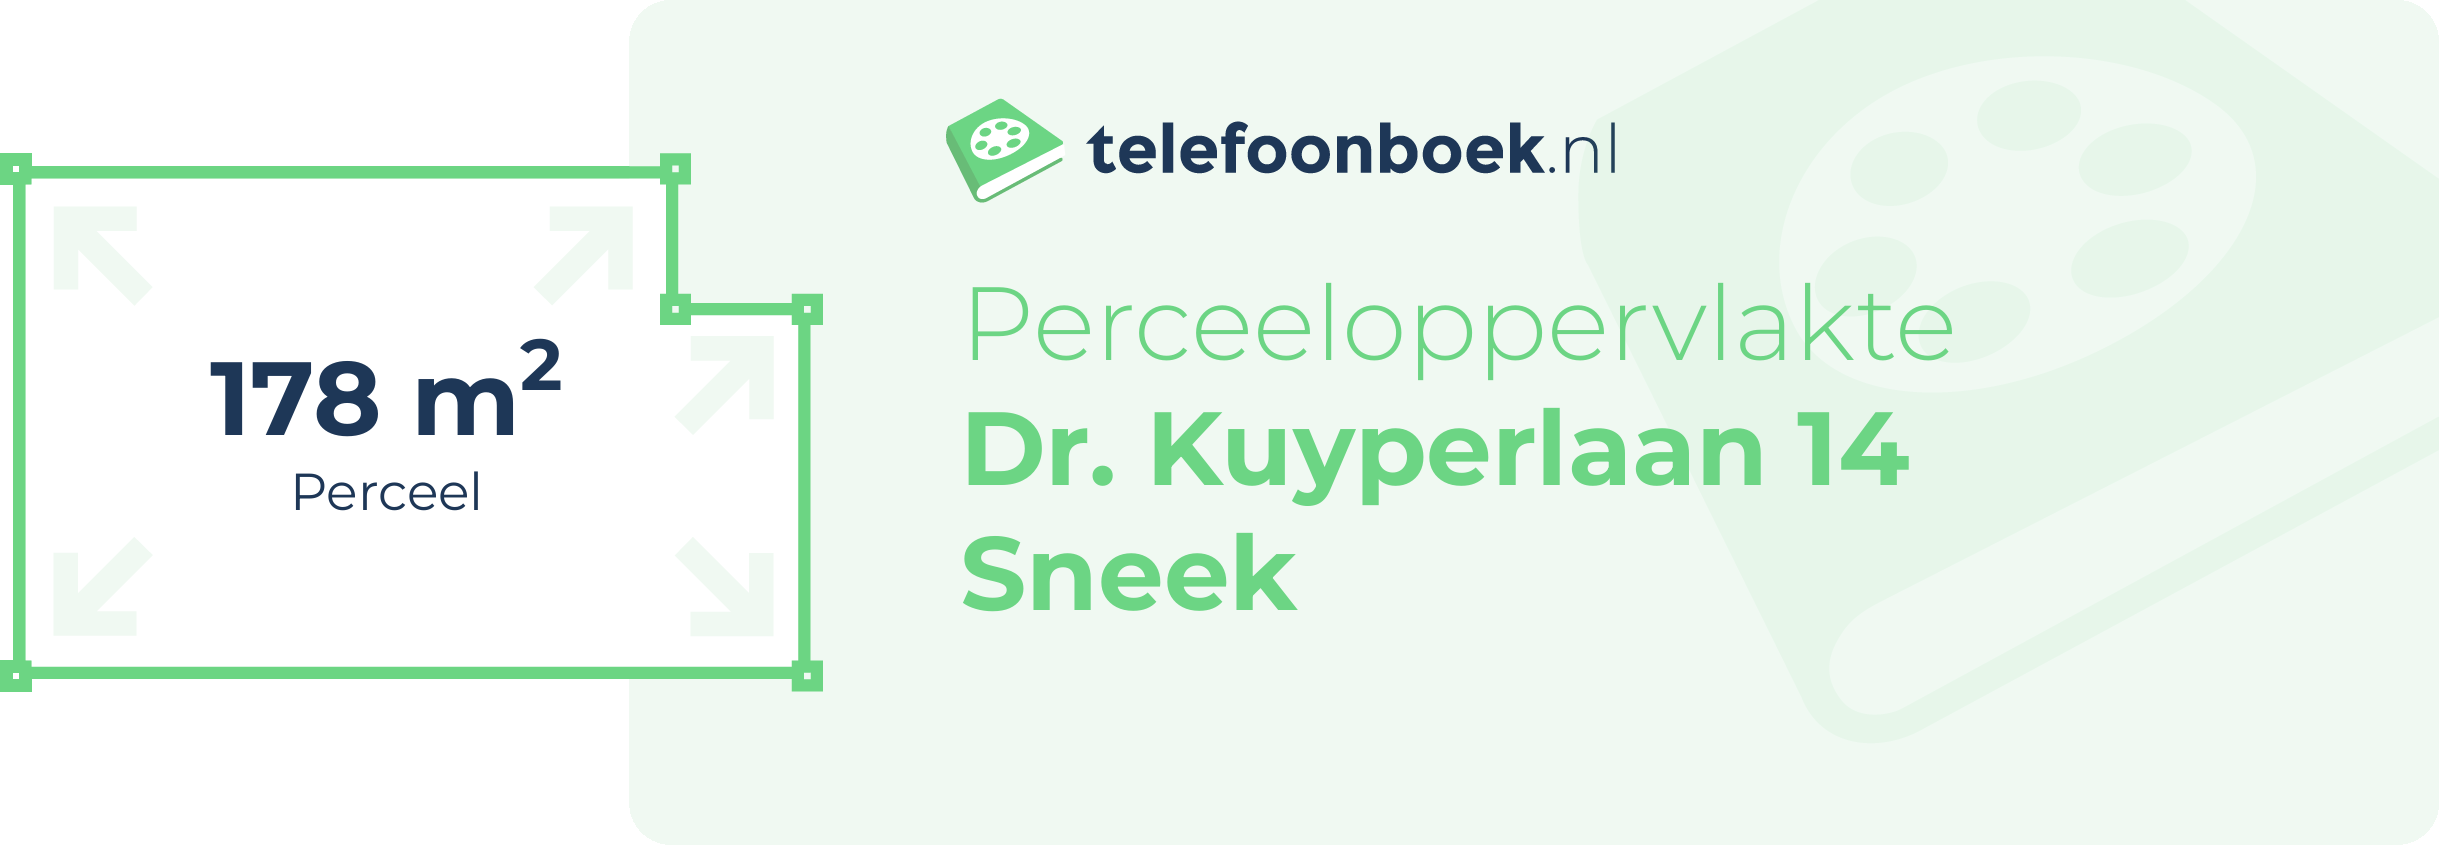 Perceeloppervlakte Dr. Kuyperlaan 14 Sneek